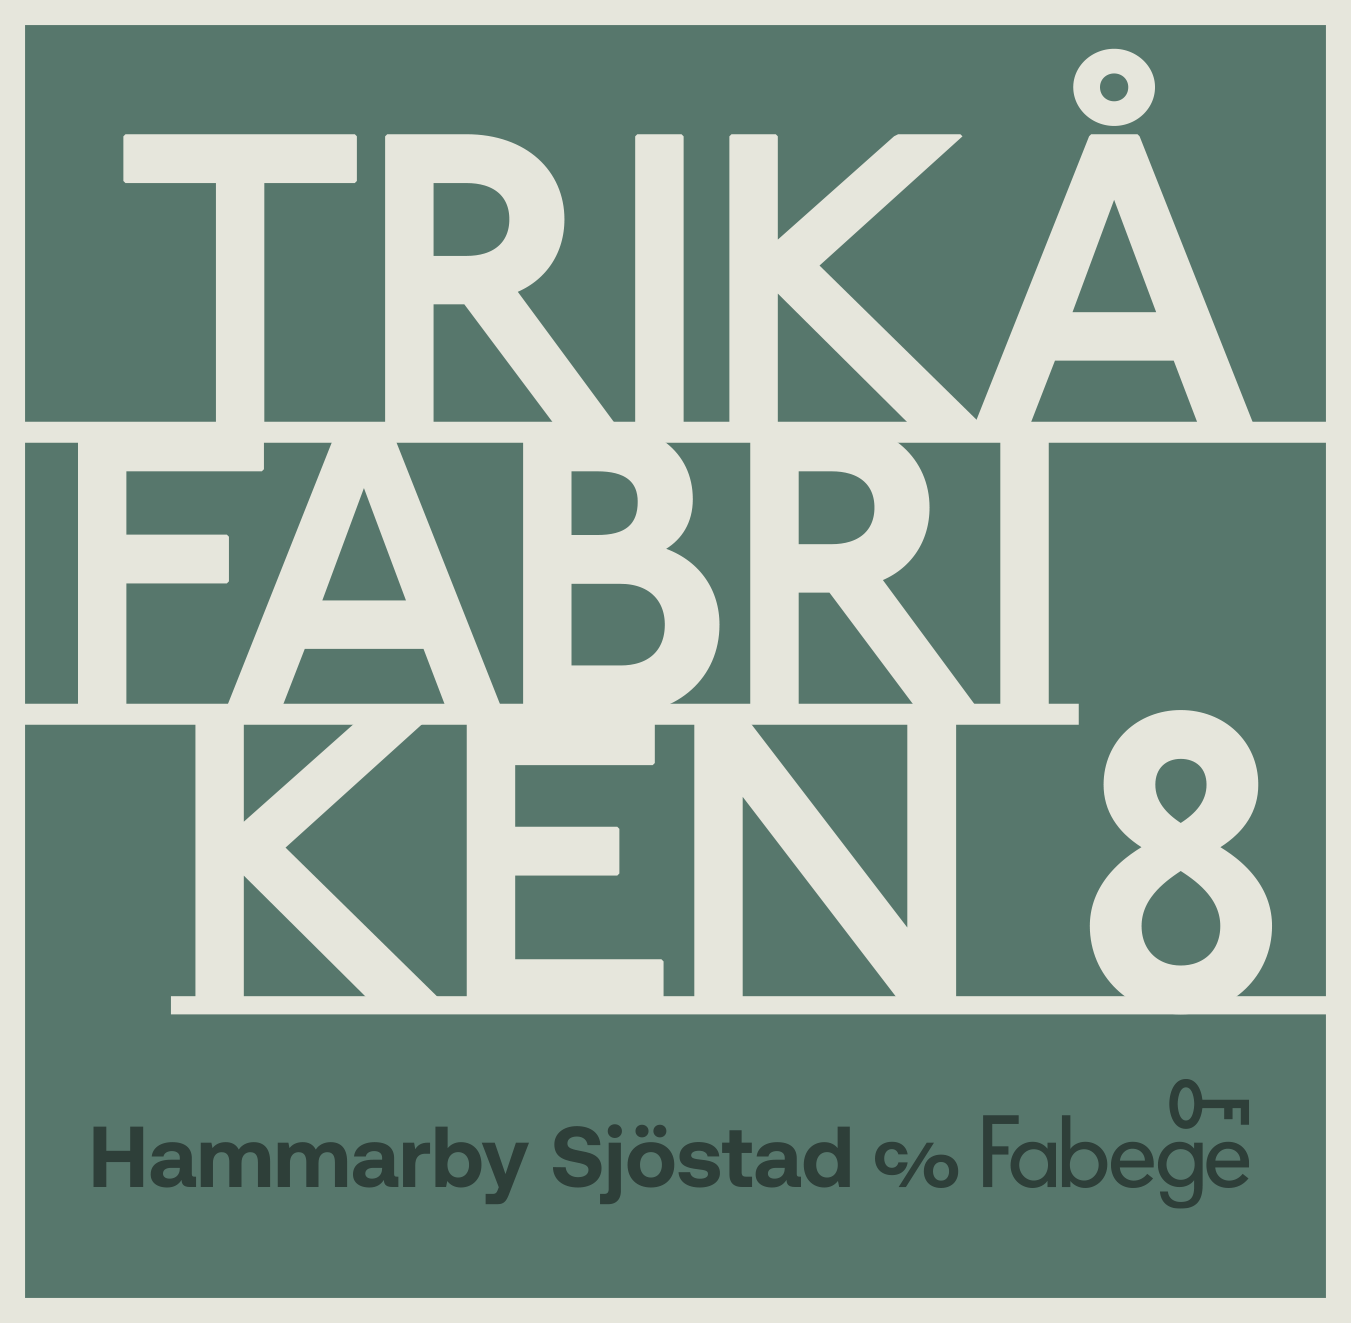 Facade picture Trikåfabriken 8